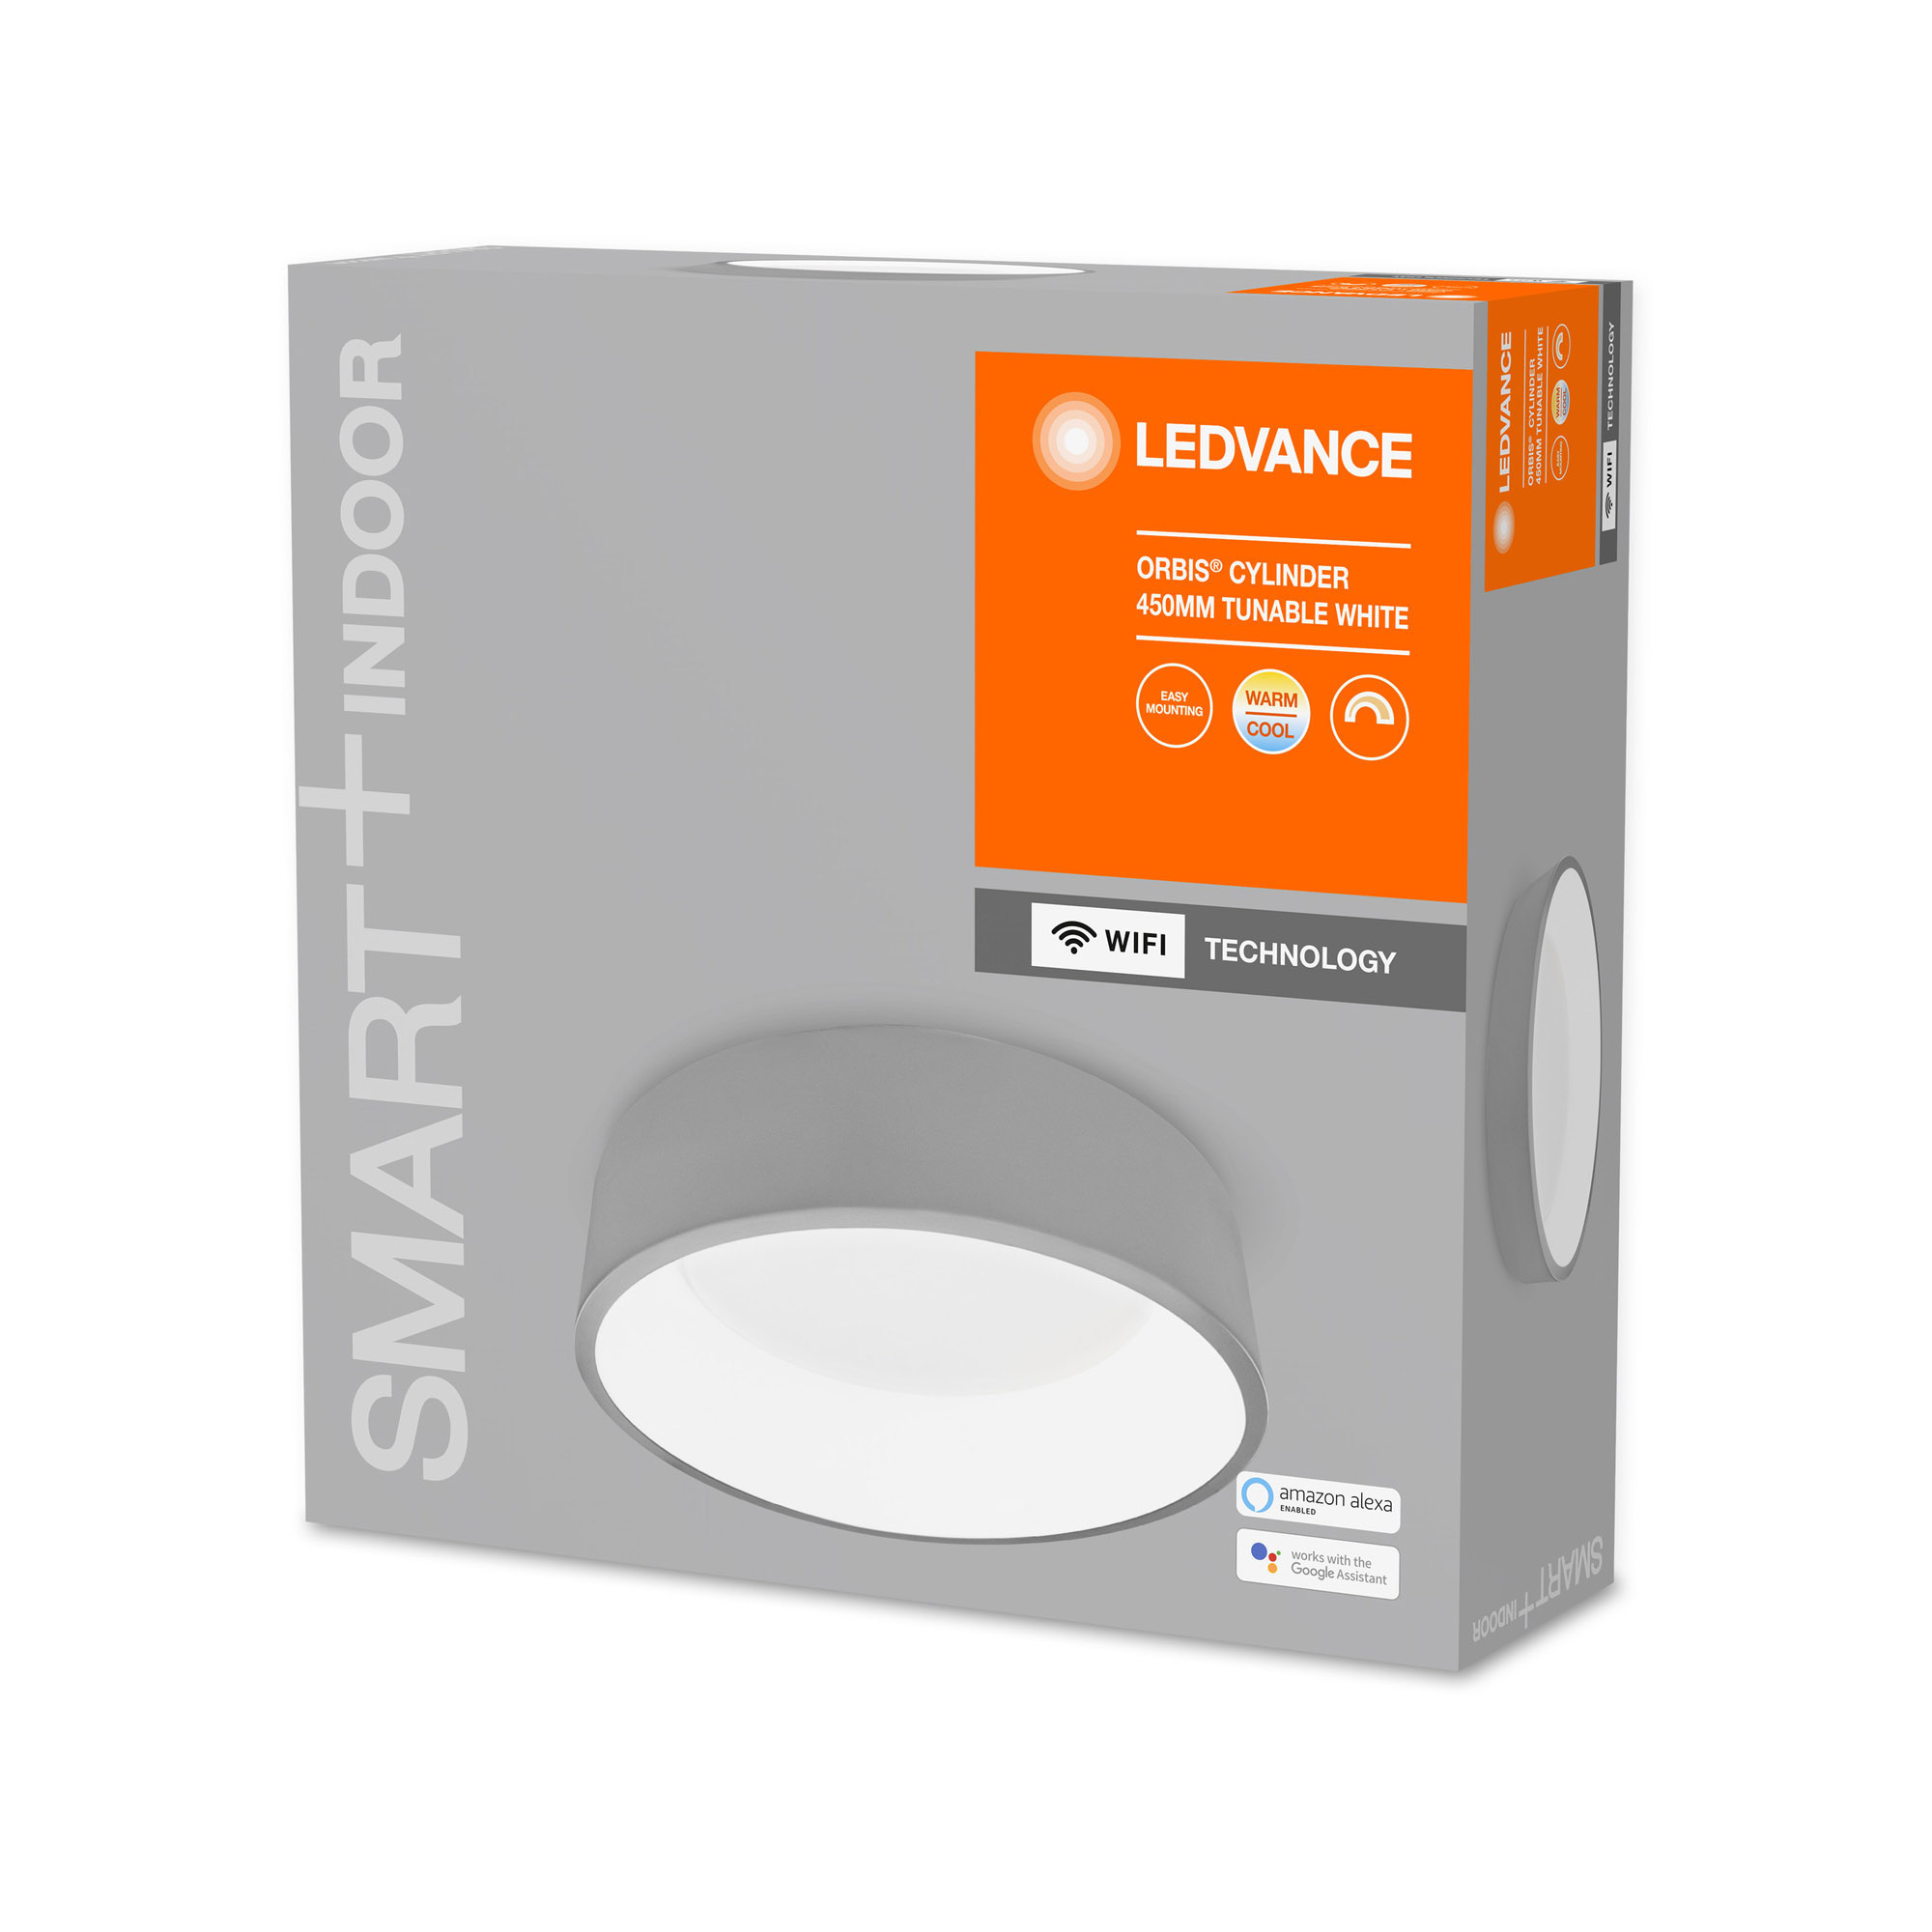 LEDVANCE SMART+ WiFi Tunable White LED Ceiling Light ORBIS Cylinder 450mm grey 2800lm